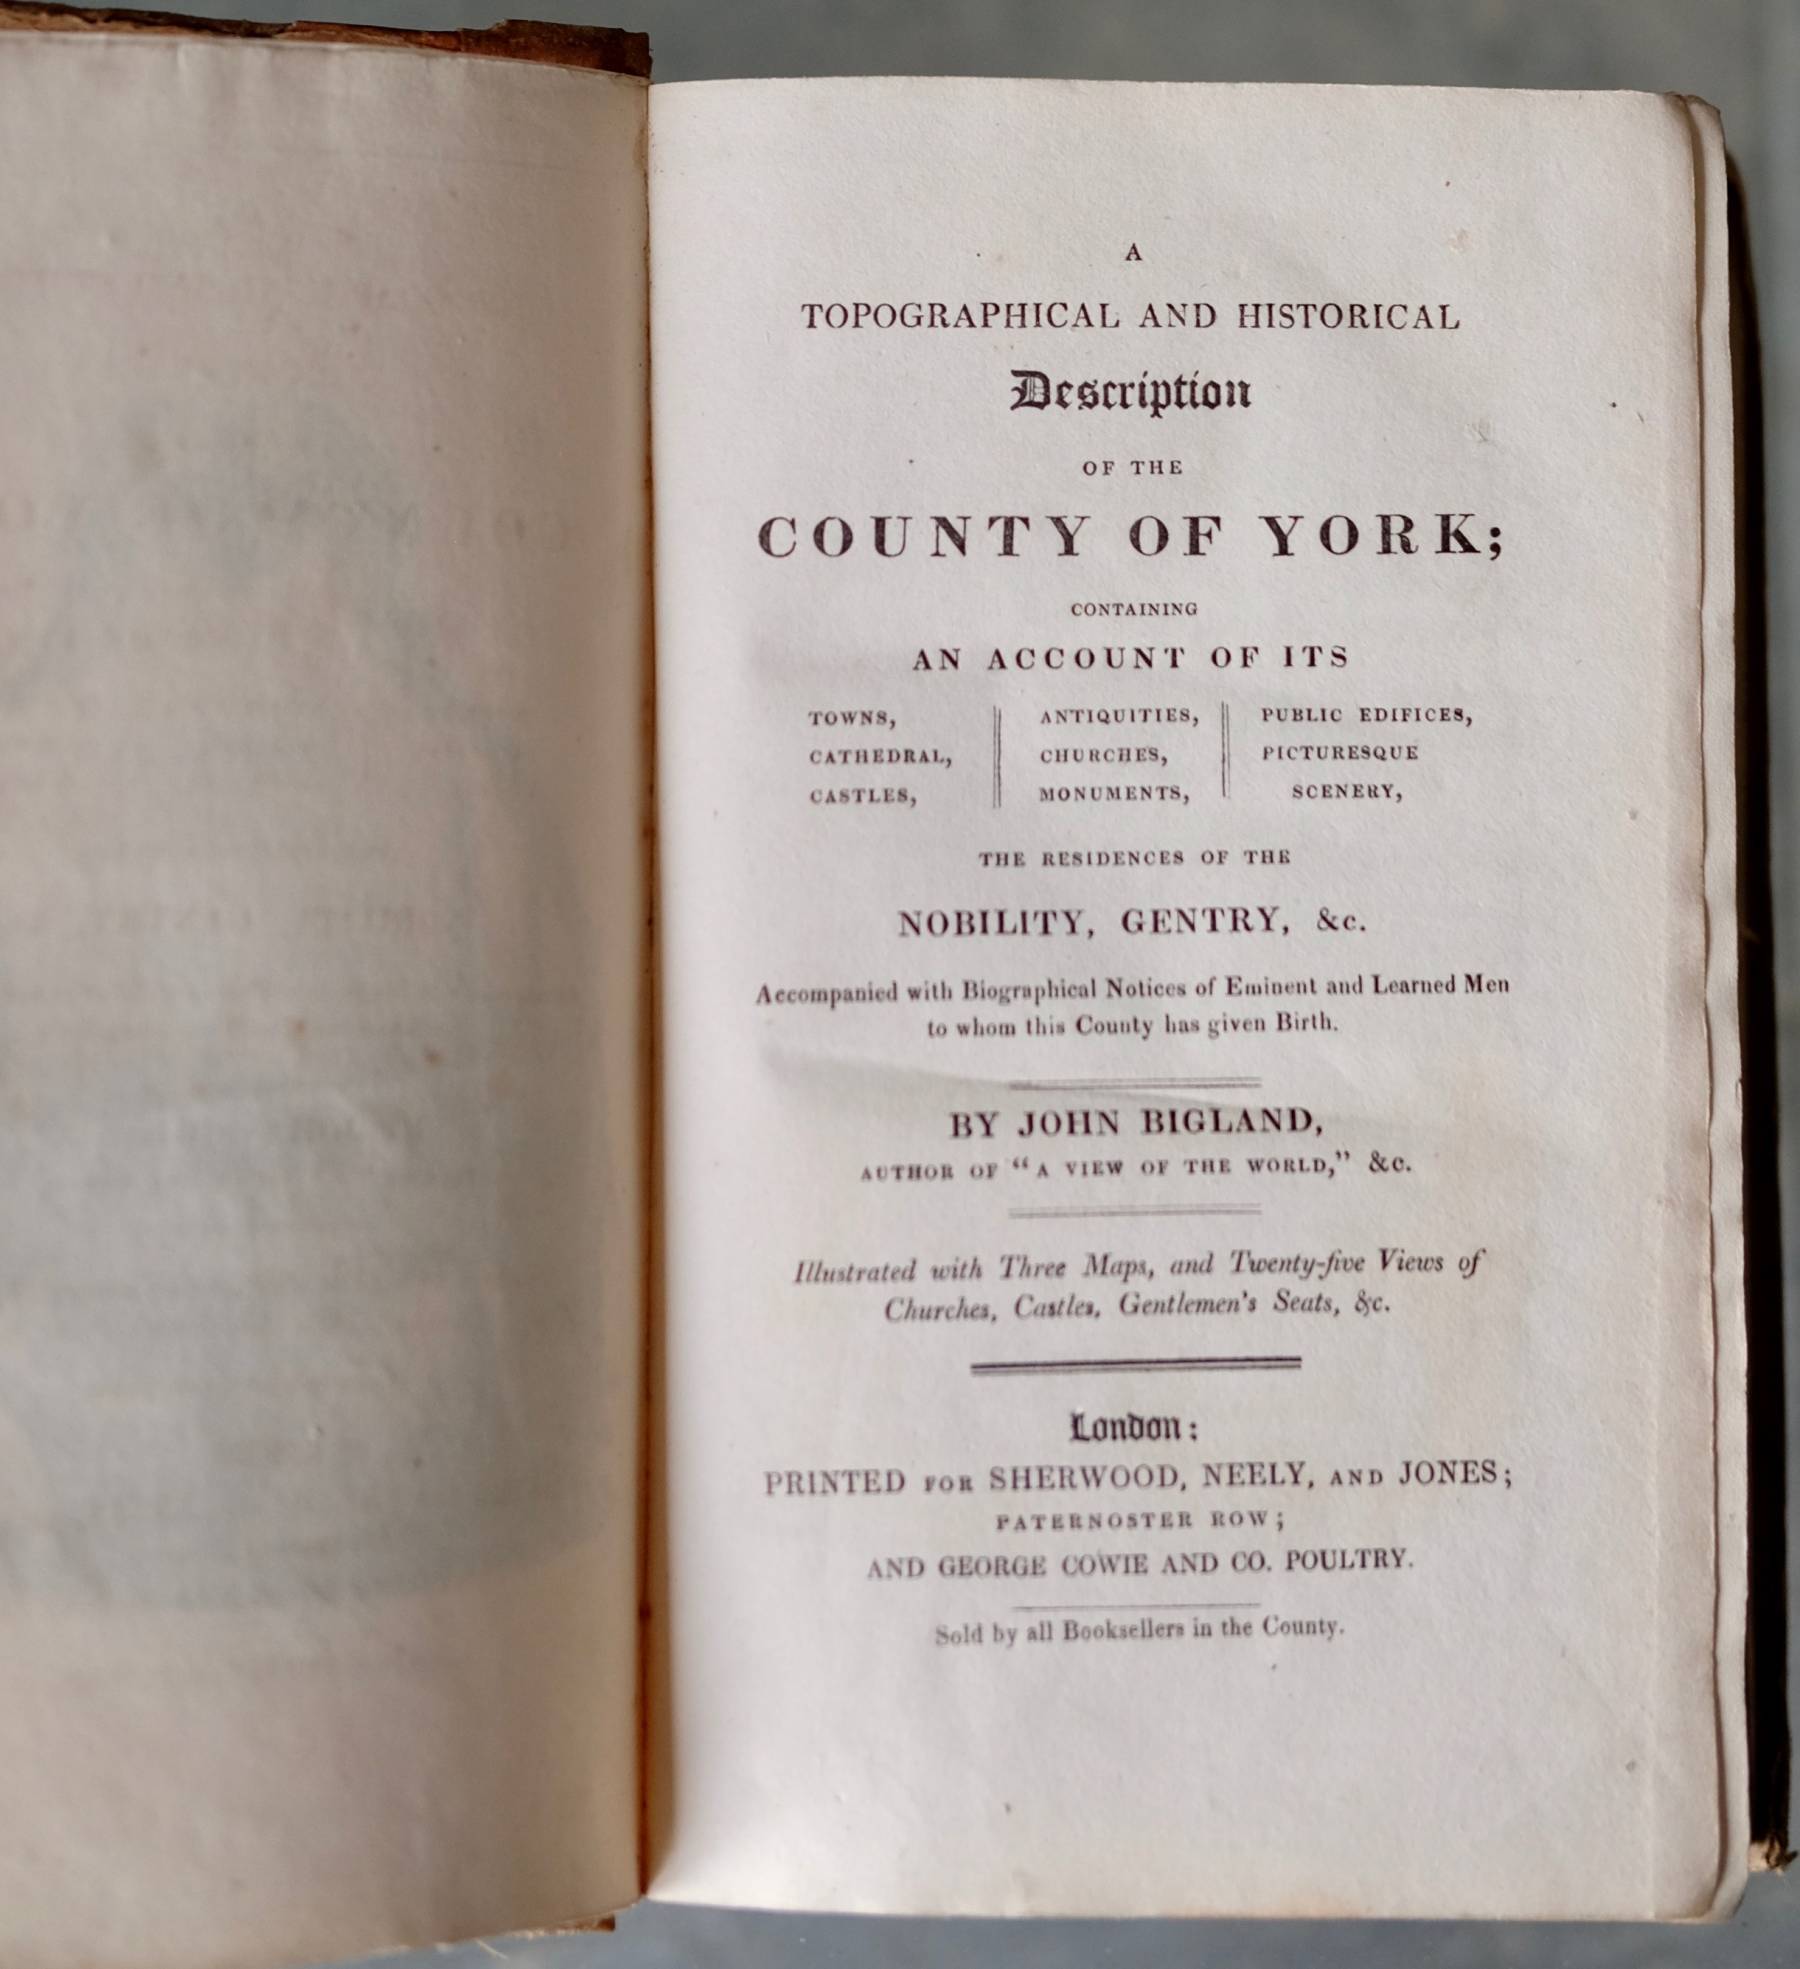 Description of the County of York by John Bigland